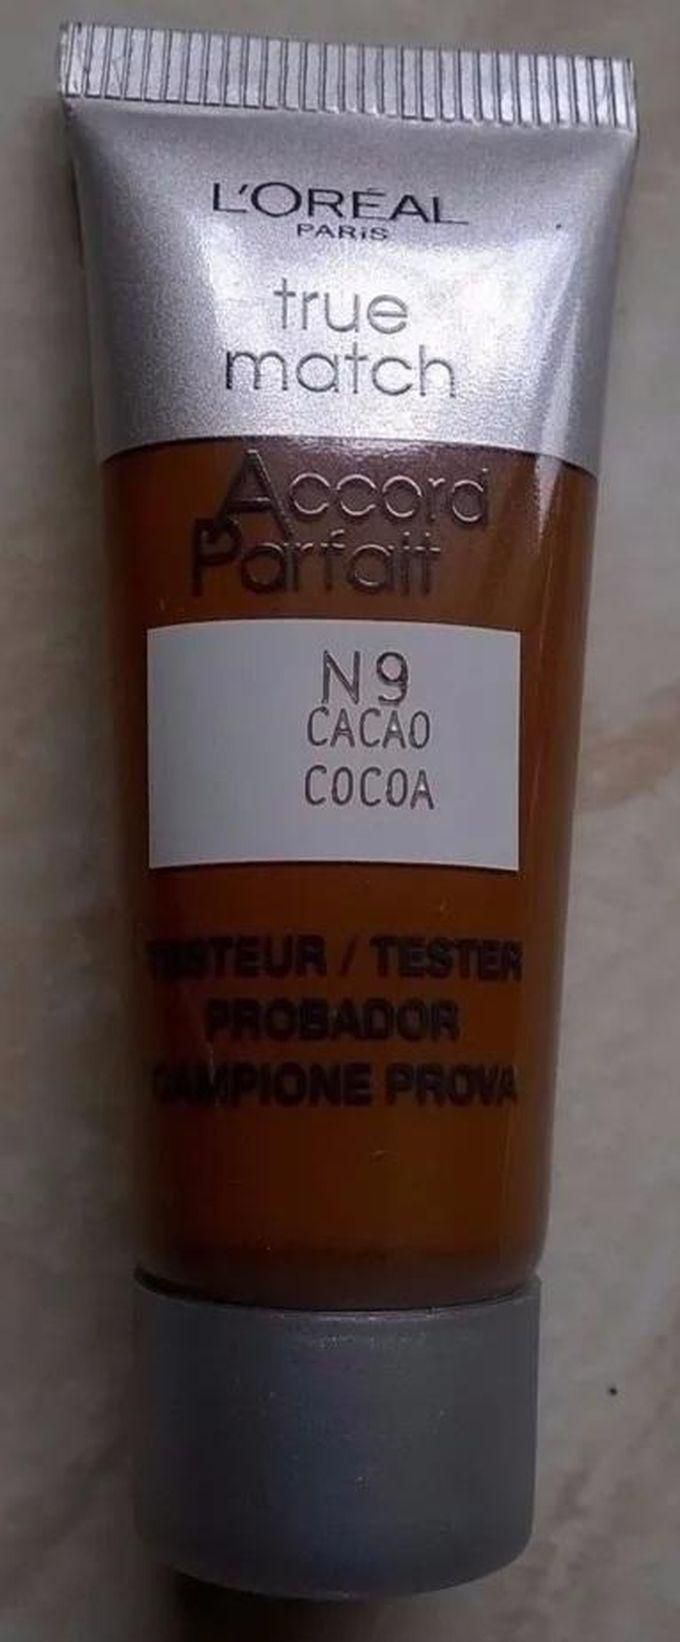 True Match Accord Parfait N9 Cacao Foundation 10 Ml